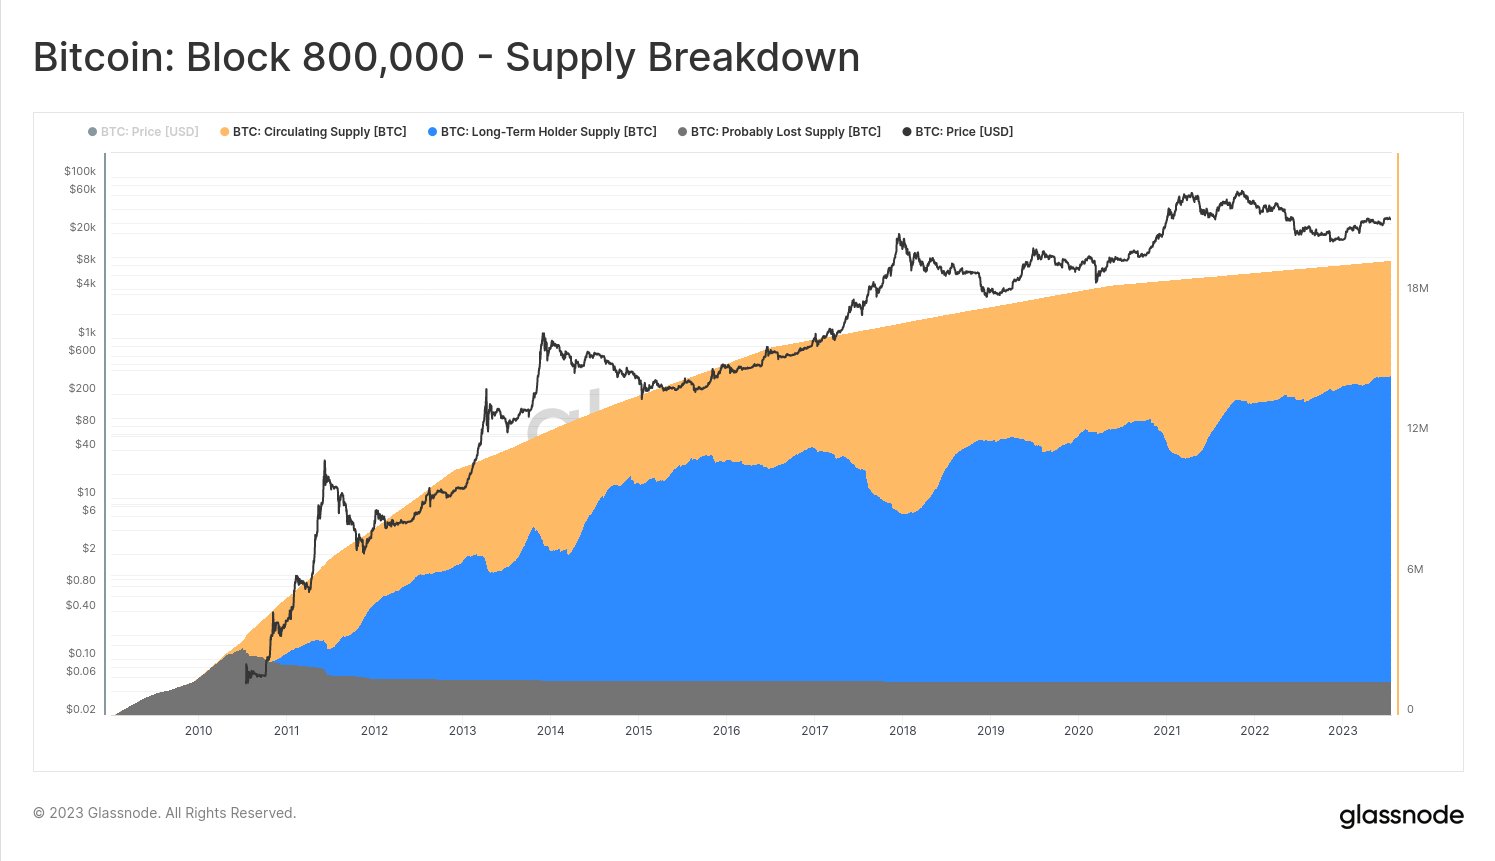 Bitcoin supply breakdown